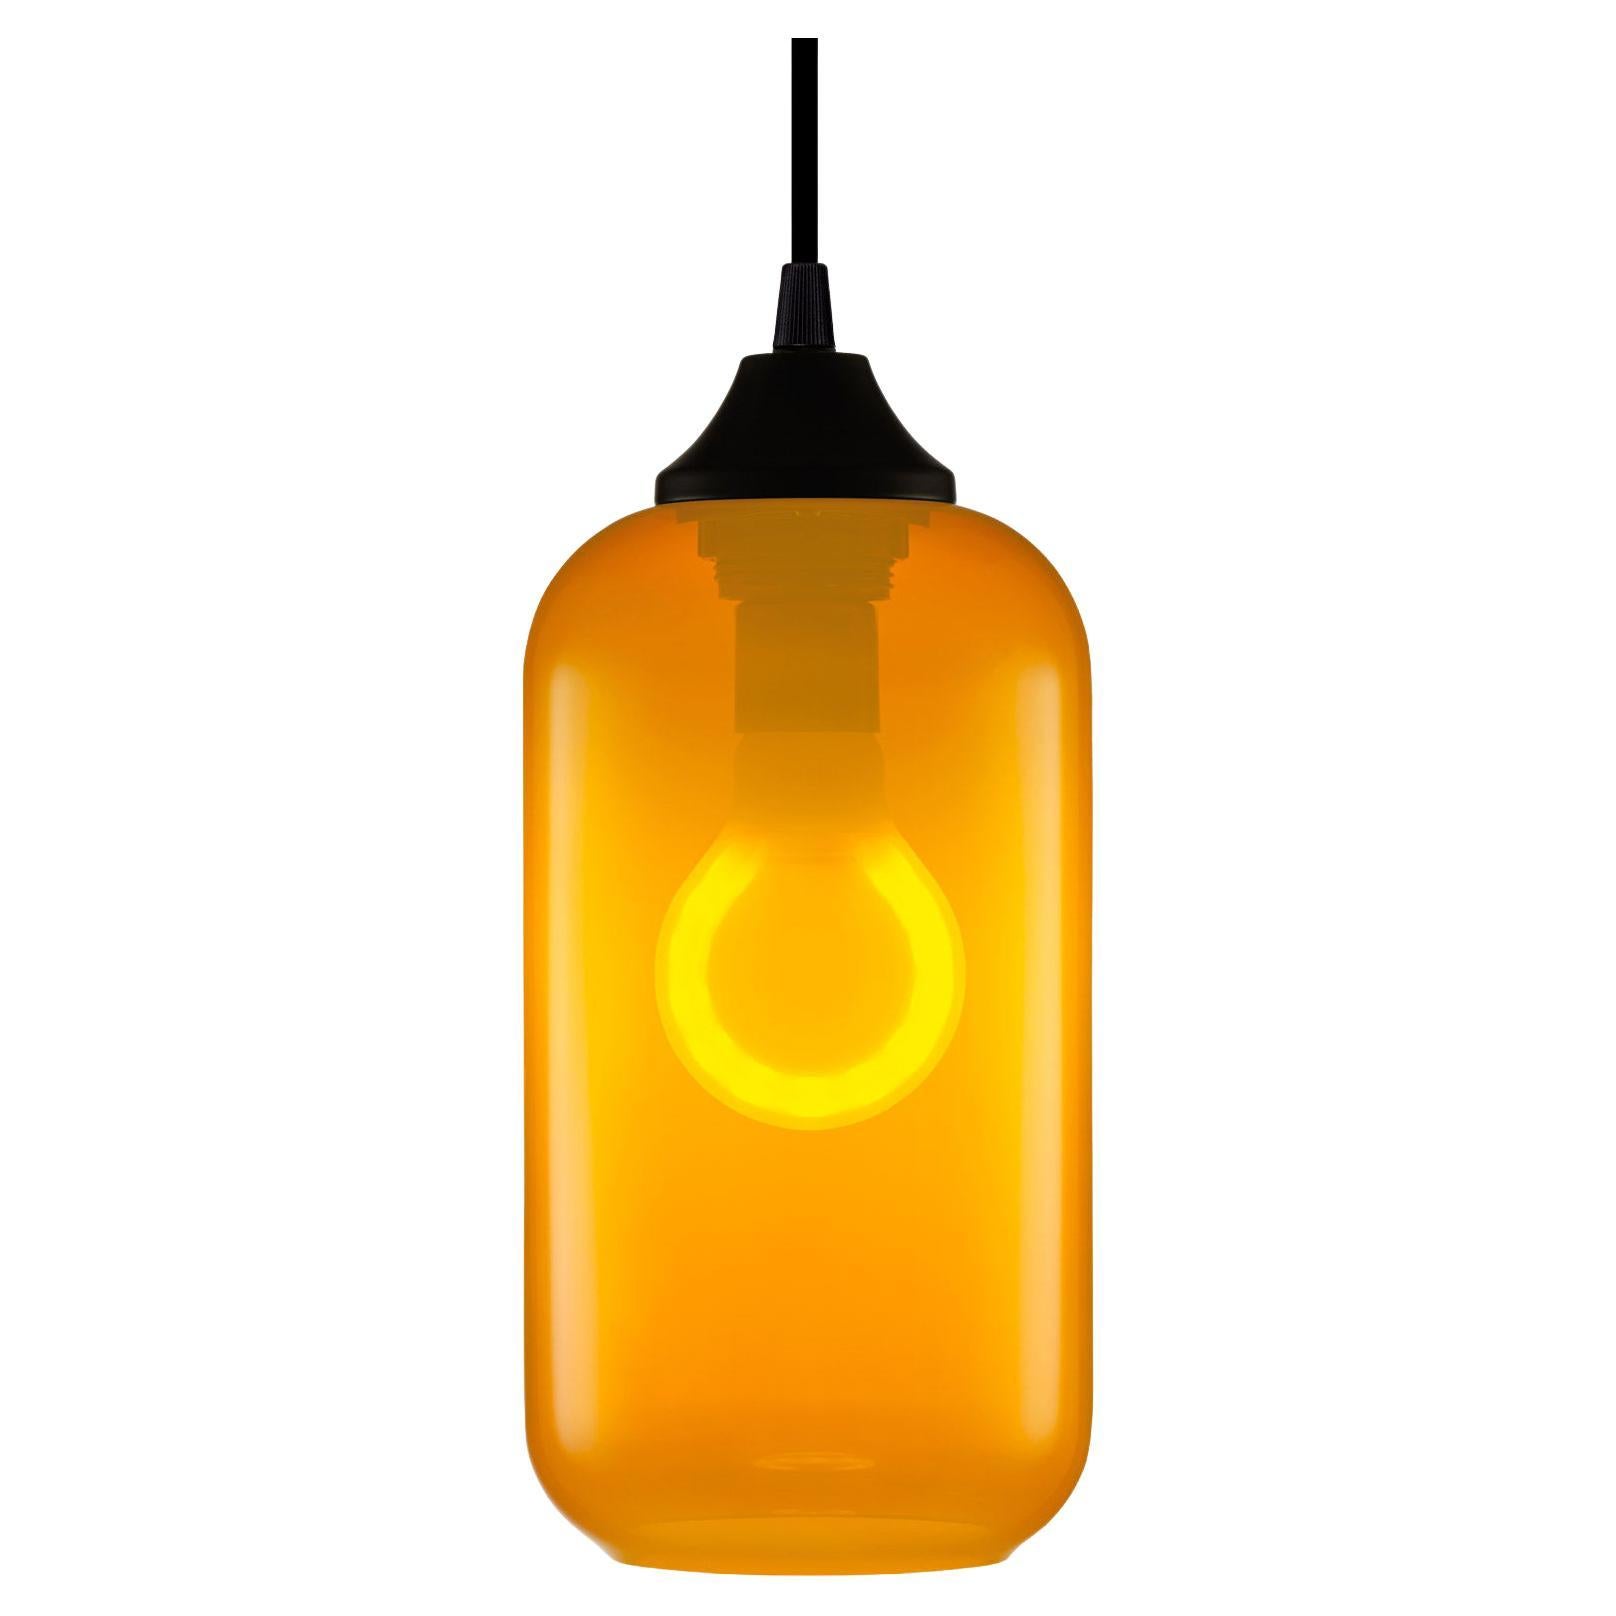 Helio Chroma Tangerine Handblown Modern Glass Pendant Light, Made in the USA